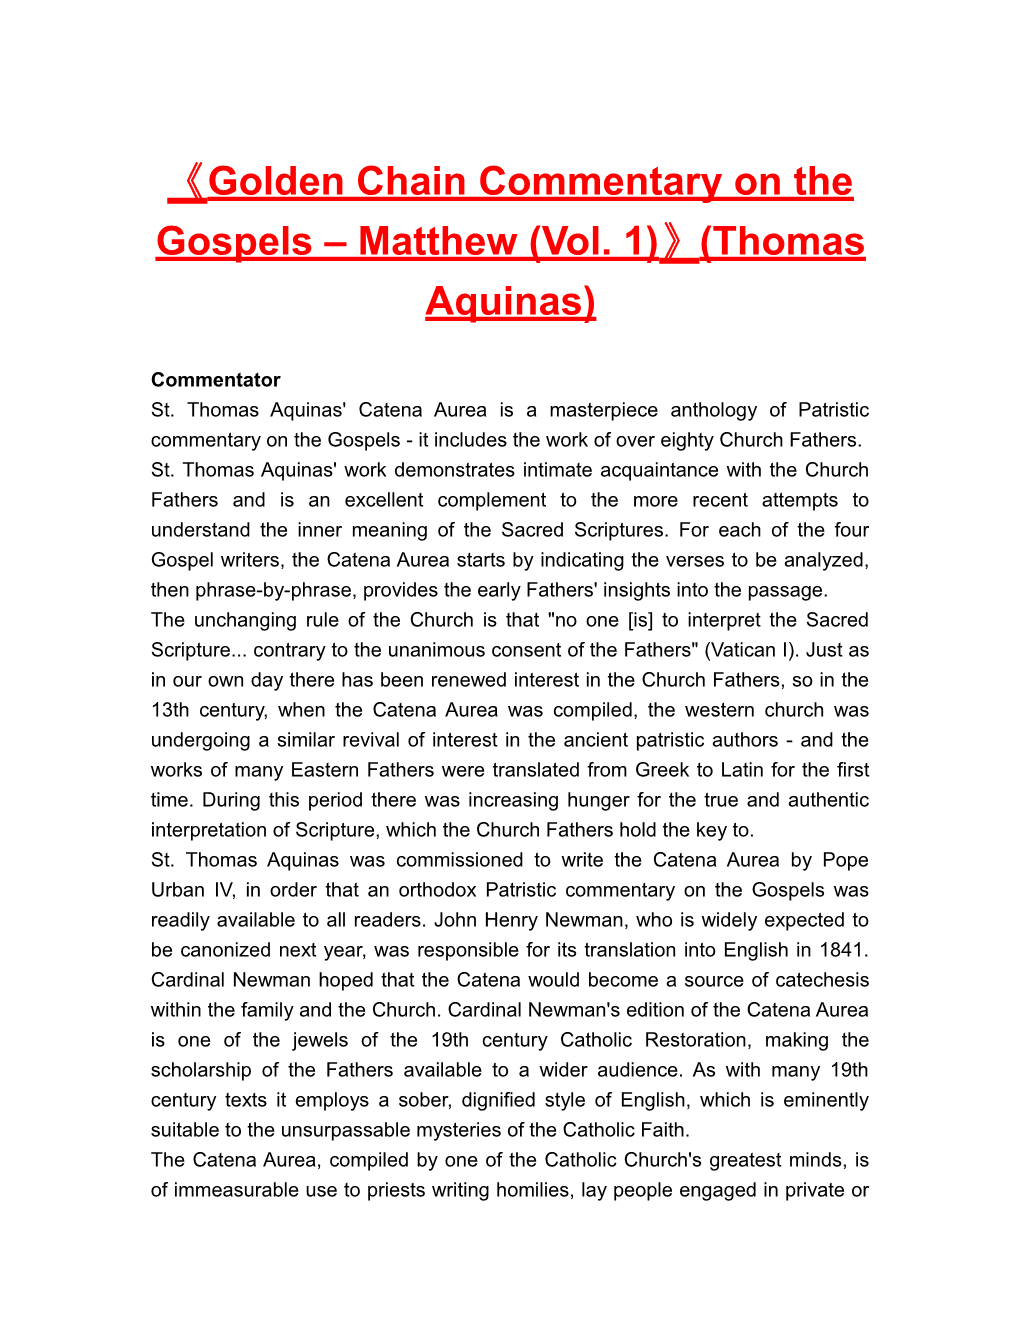 Golden Chain Commentary on the Gospels Matthew (Vol. 1) (Thomas Aquinas)